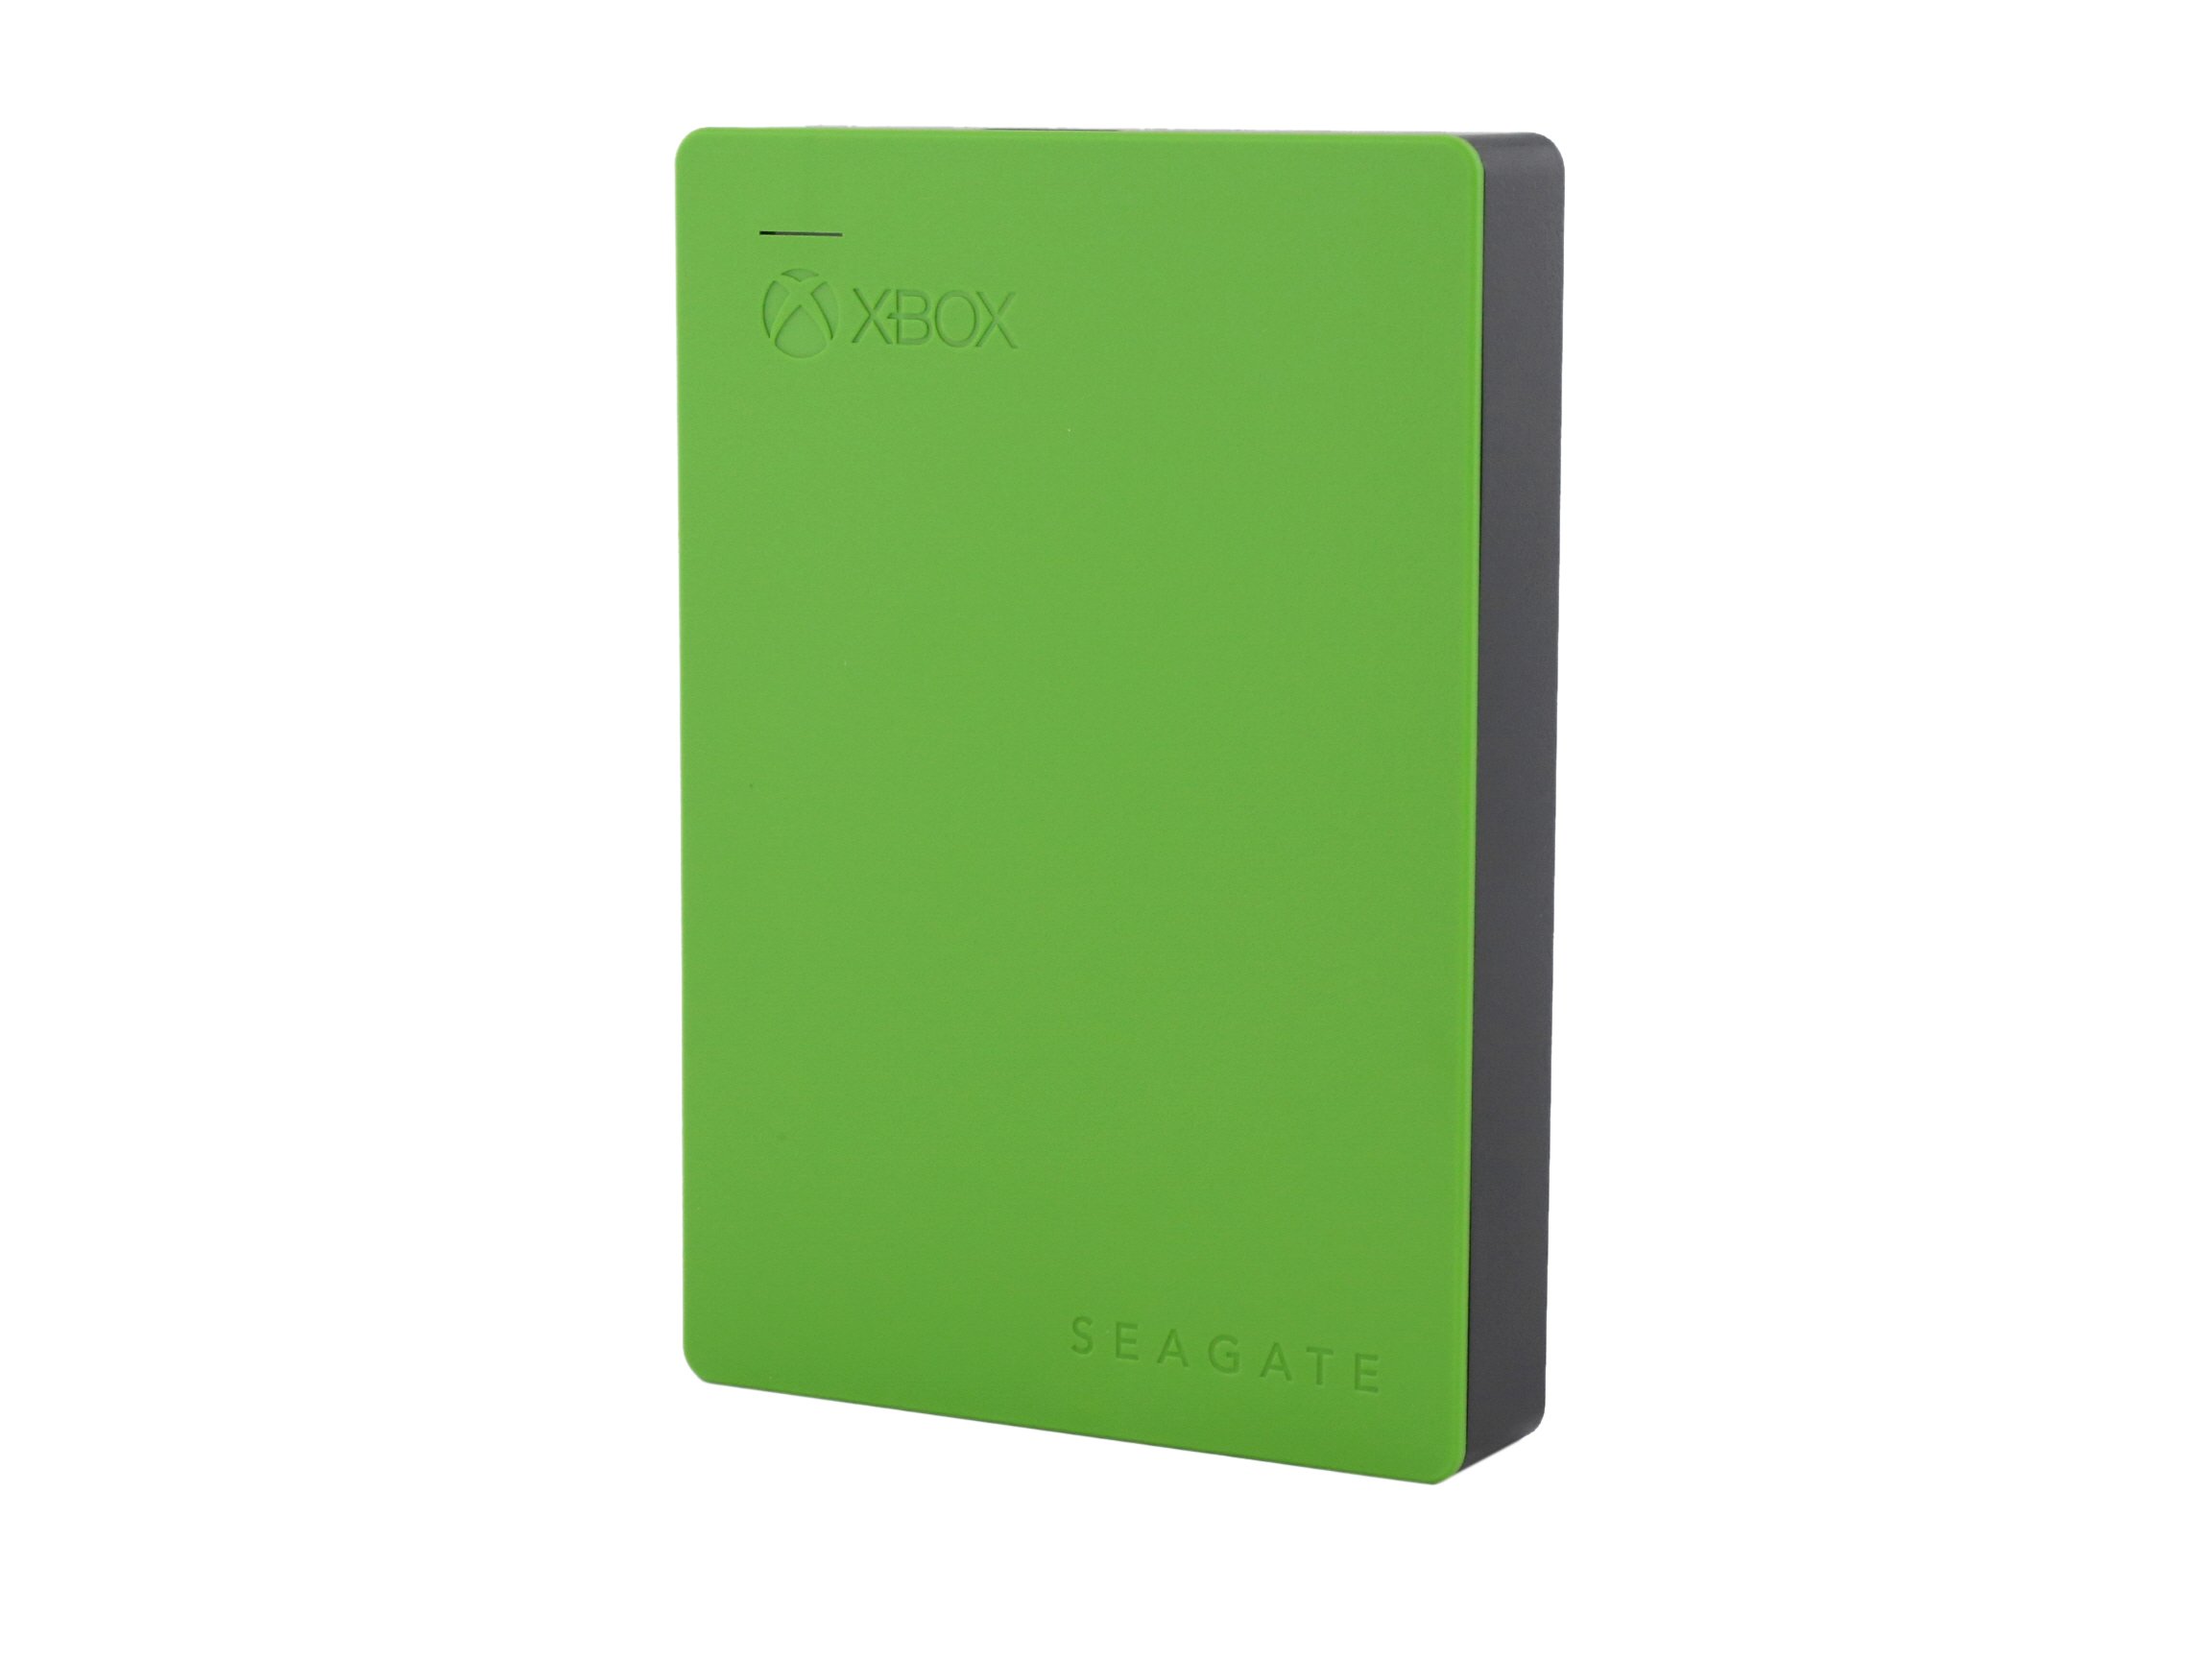 Seagate Game Drive 4TB Portable External Hard Drive for Xbox One USB 3.0 STEA4000402 - Green